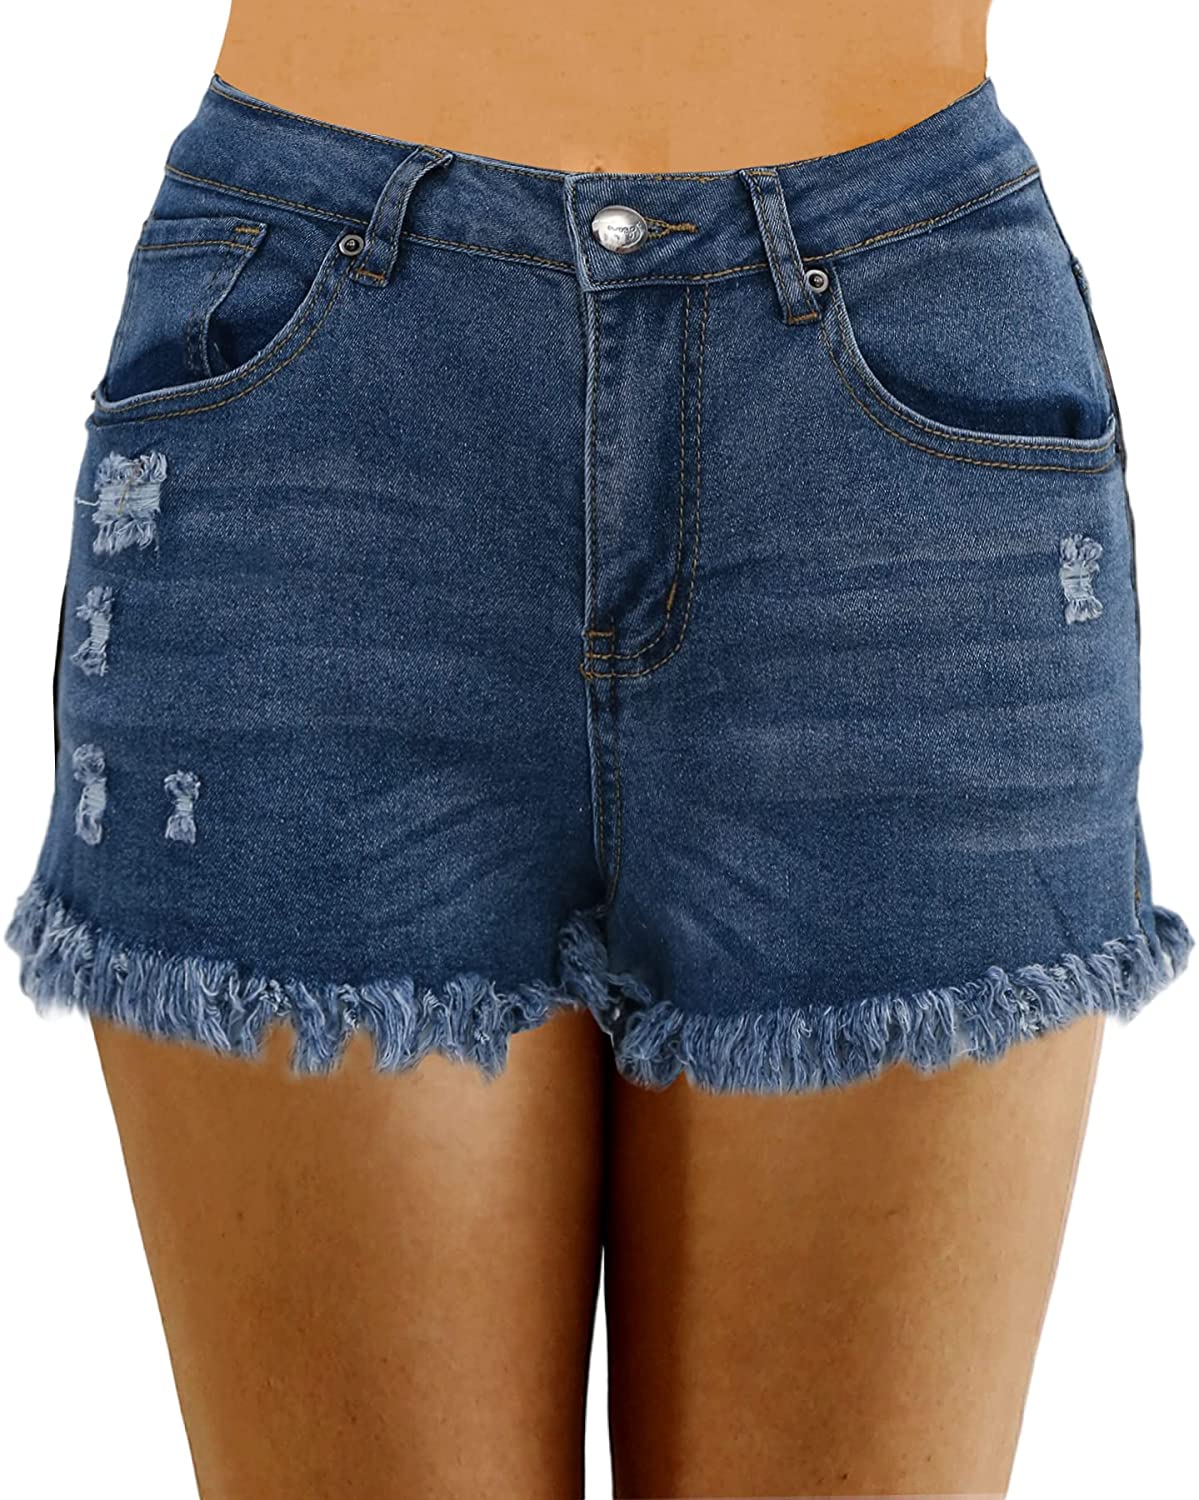 NTG Fad Dark Blue-2 / 33 Regular Xintianji Women's Ripped Hole Denim Jean Shorts Summer Stretchy Distressed Casual Frayed Raw Hem Short Pants with Pockets